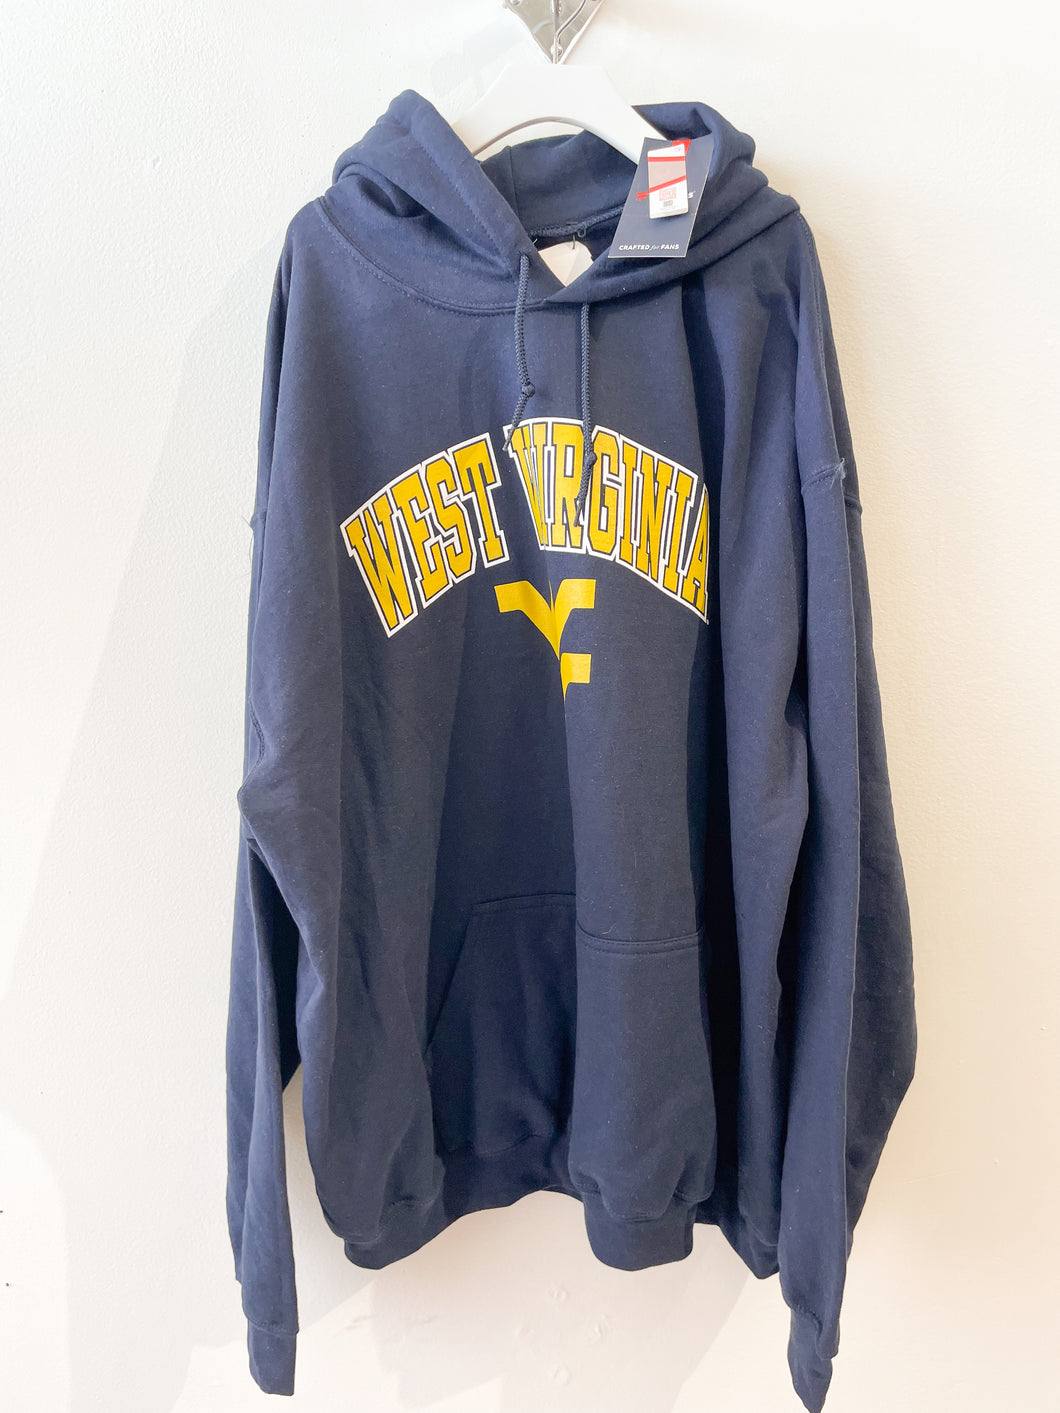 WVU Fanatics Sweatshirt Size 4XL *